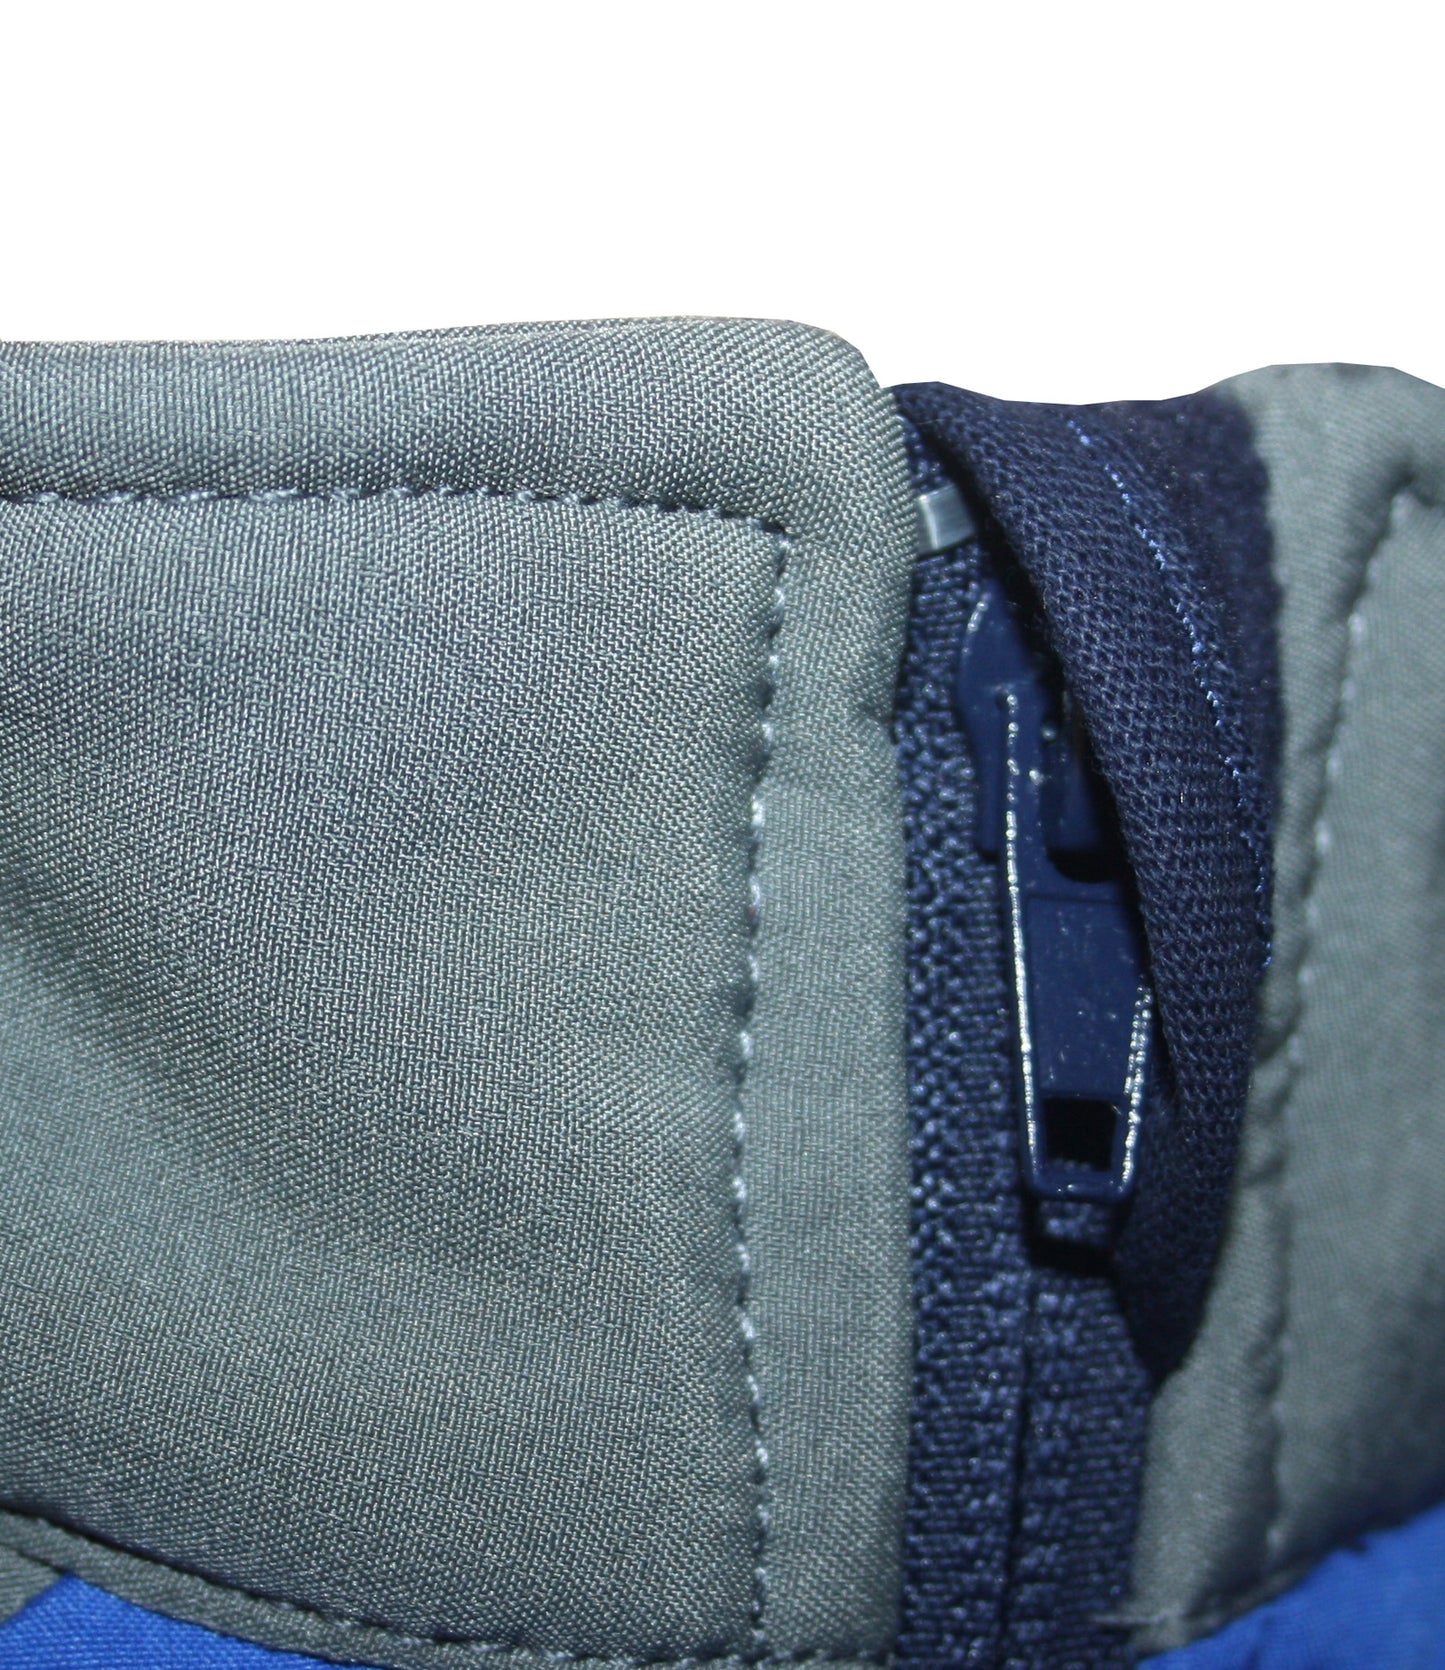 NiT-Top Damen Softshelljacke Jacke Softshell Arbeitsjacke Berufsbekleidung blau